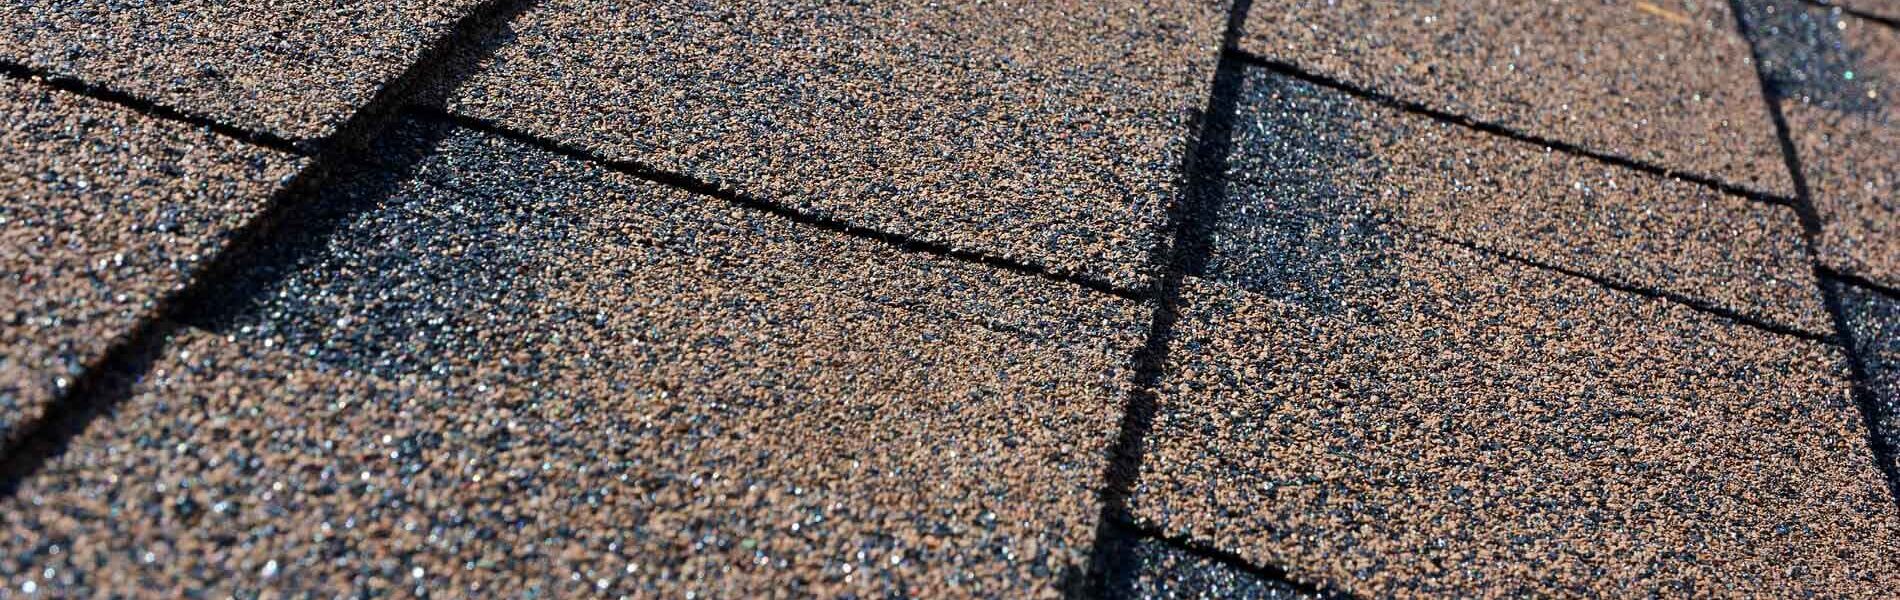 best flagstaff asphalt shingle roofer new construction or re-roof